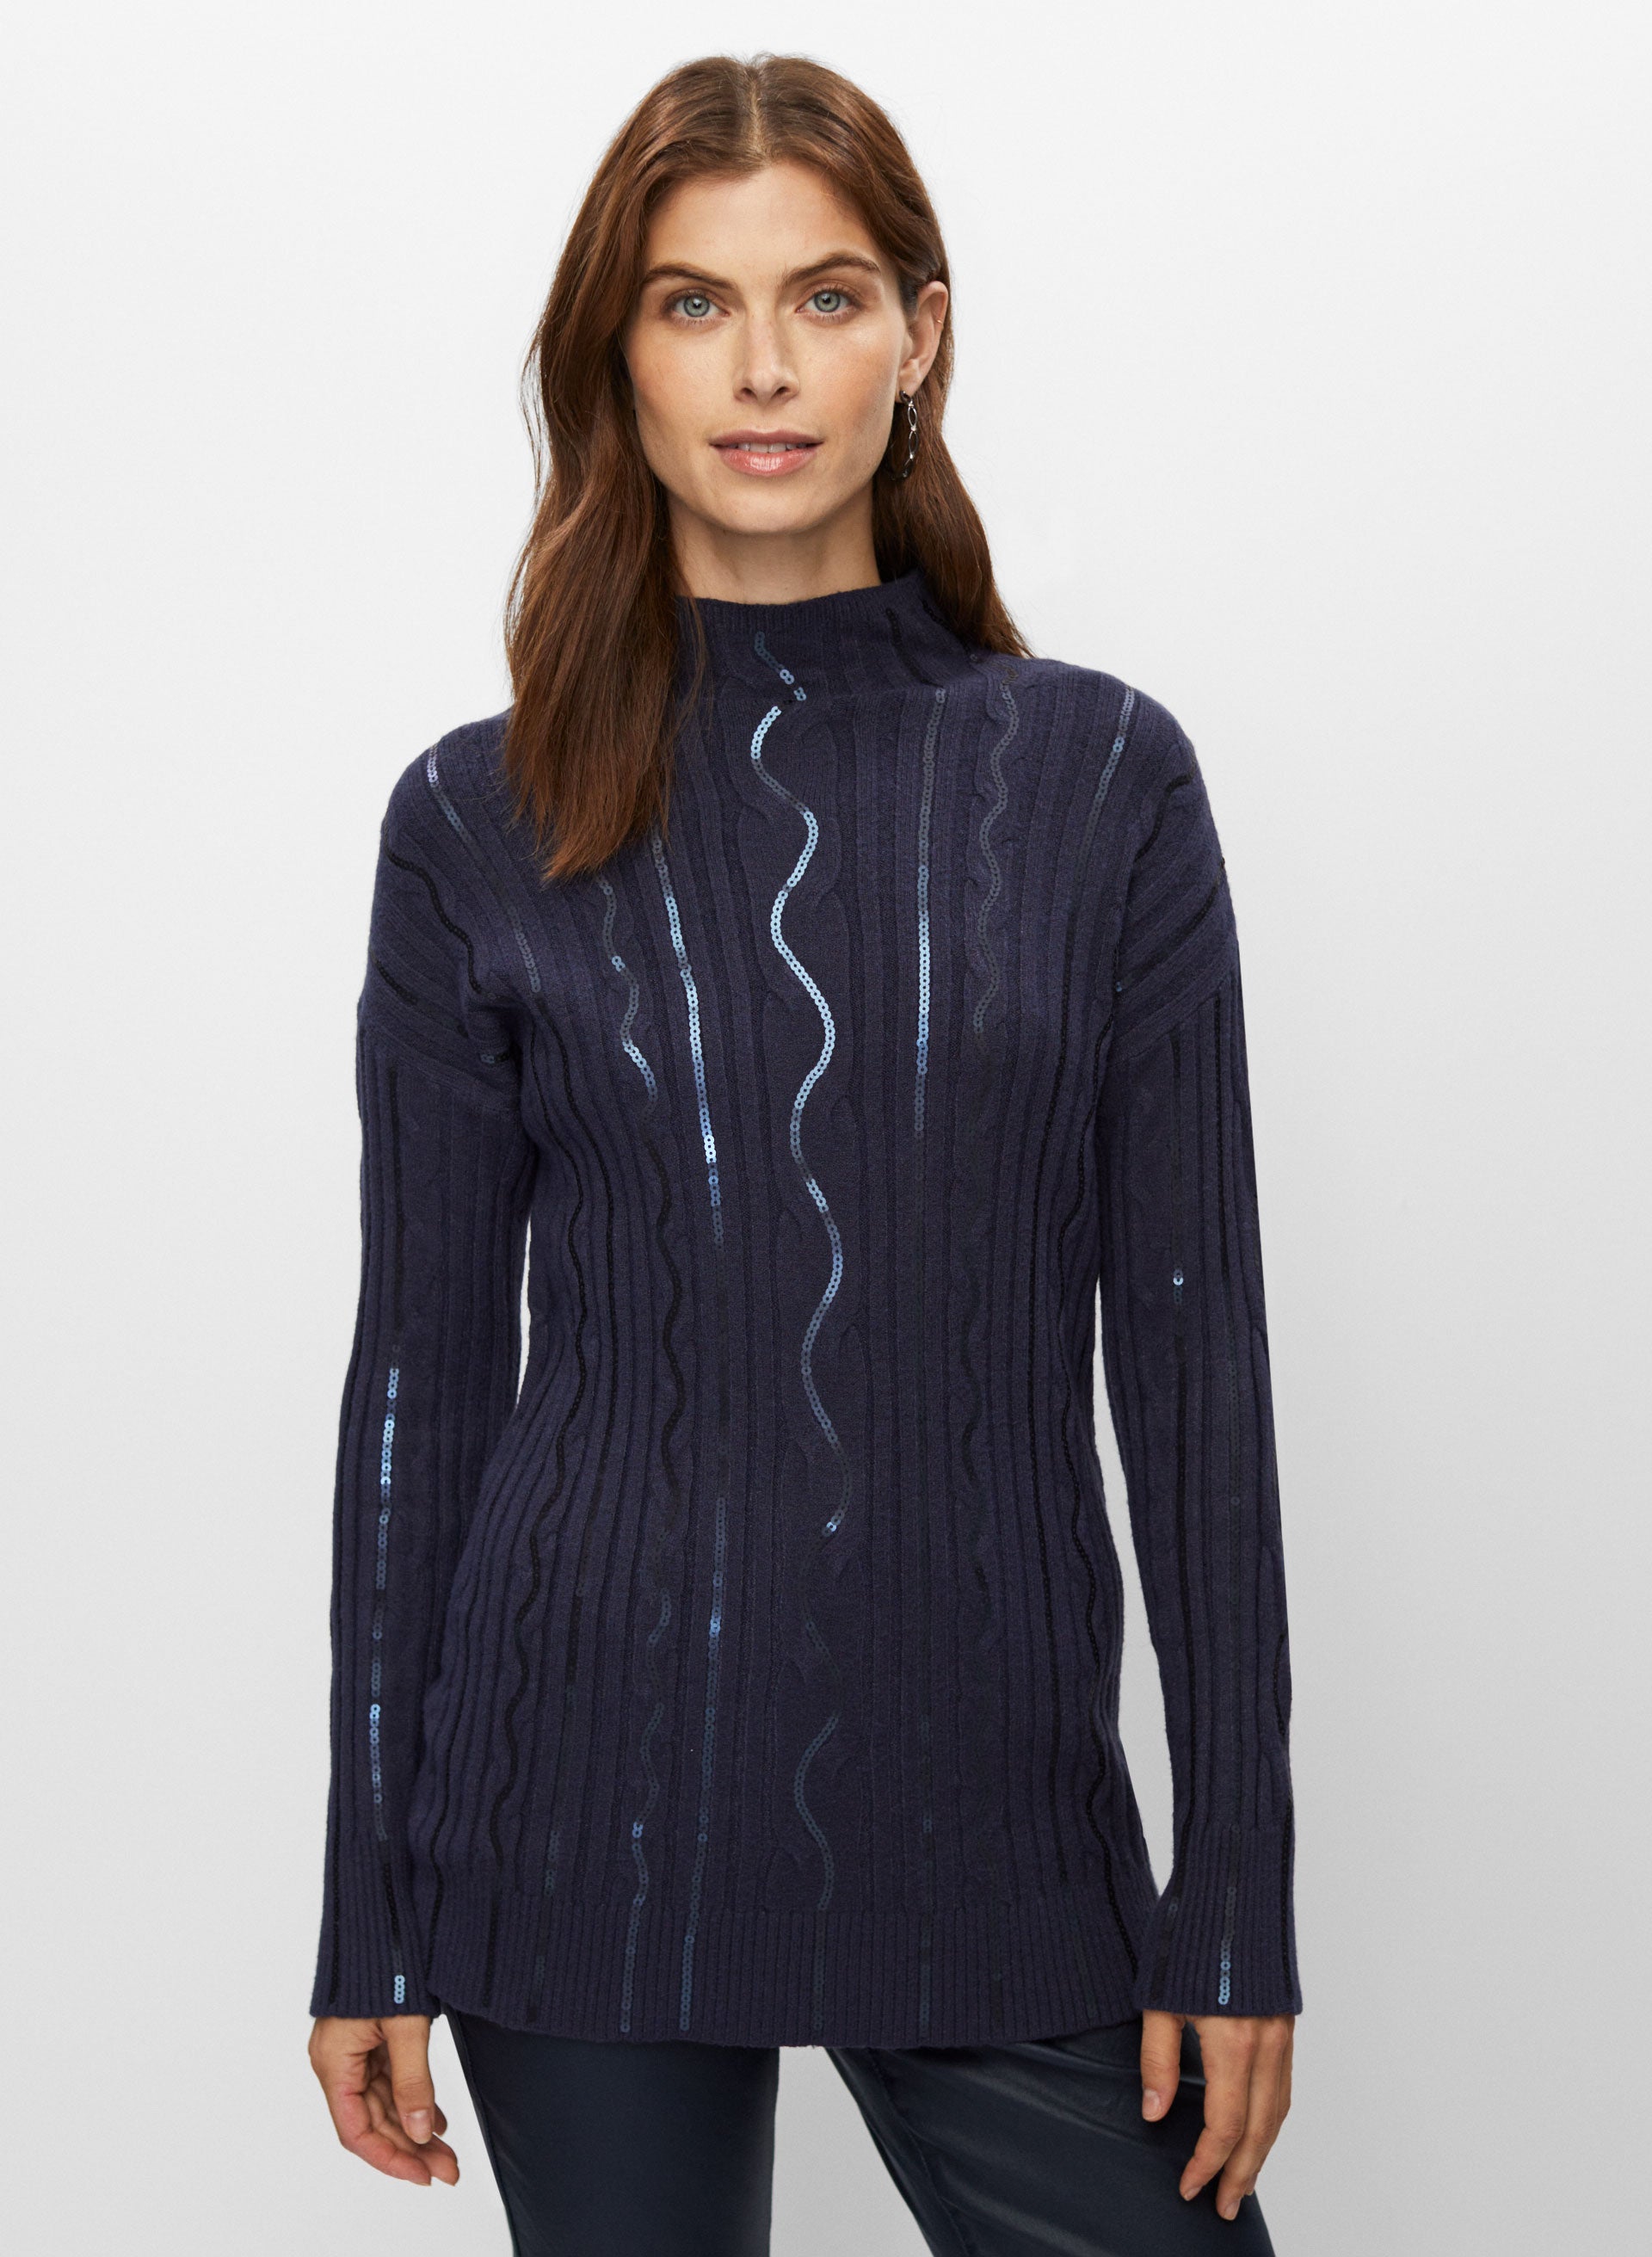 Melanie Sweater Tunic